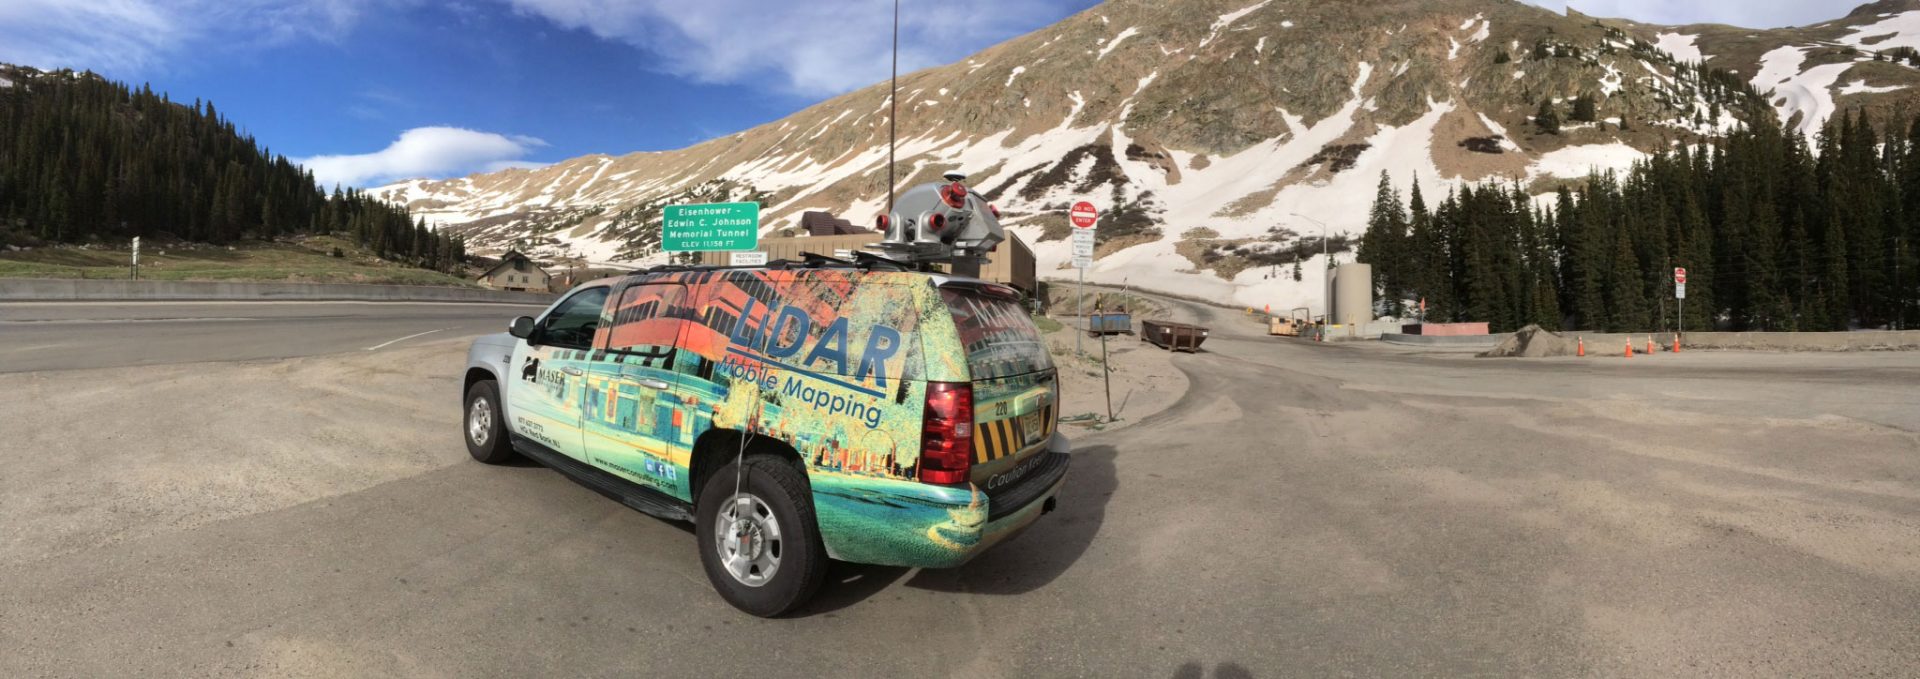 Mobile Lidar truck in Colorado